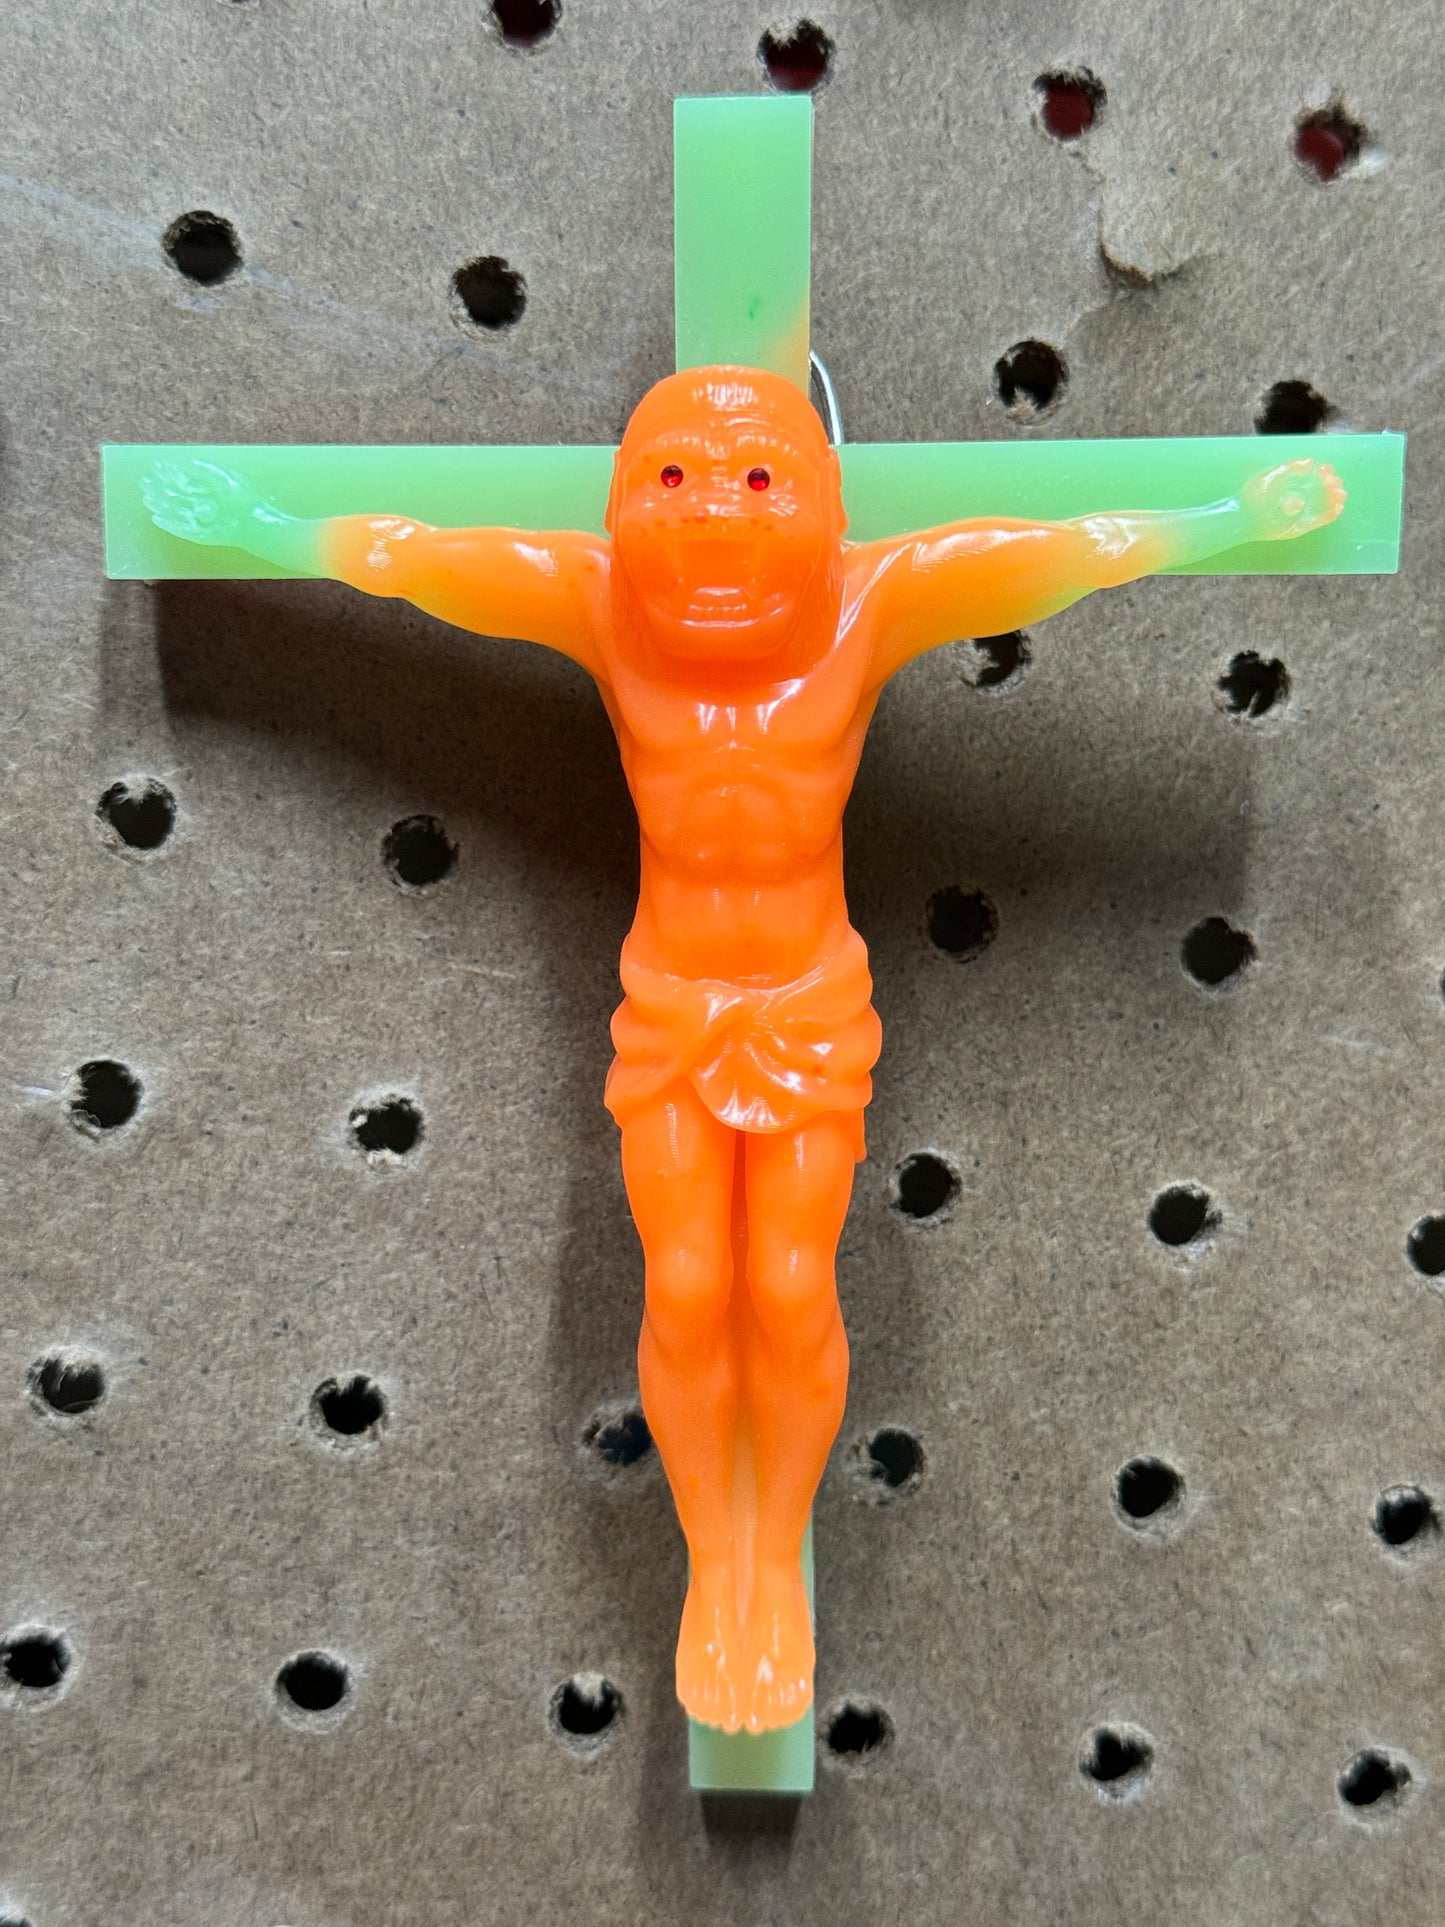 Christ on the Cross but he is an Ape: Choice